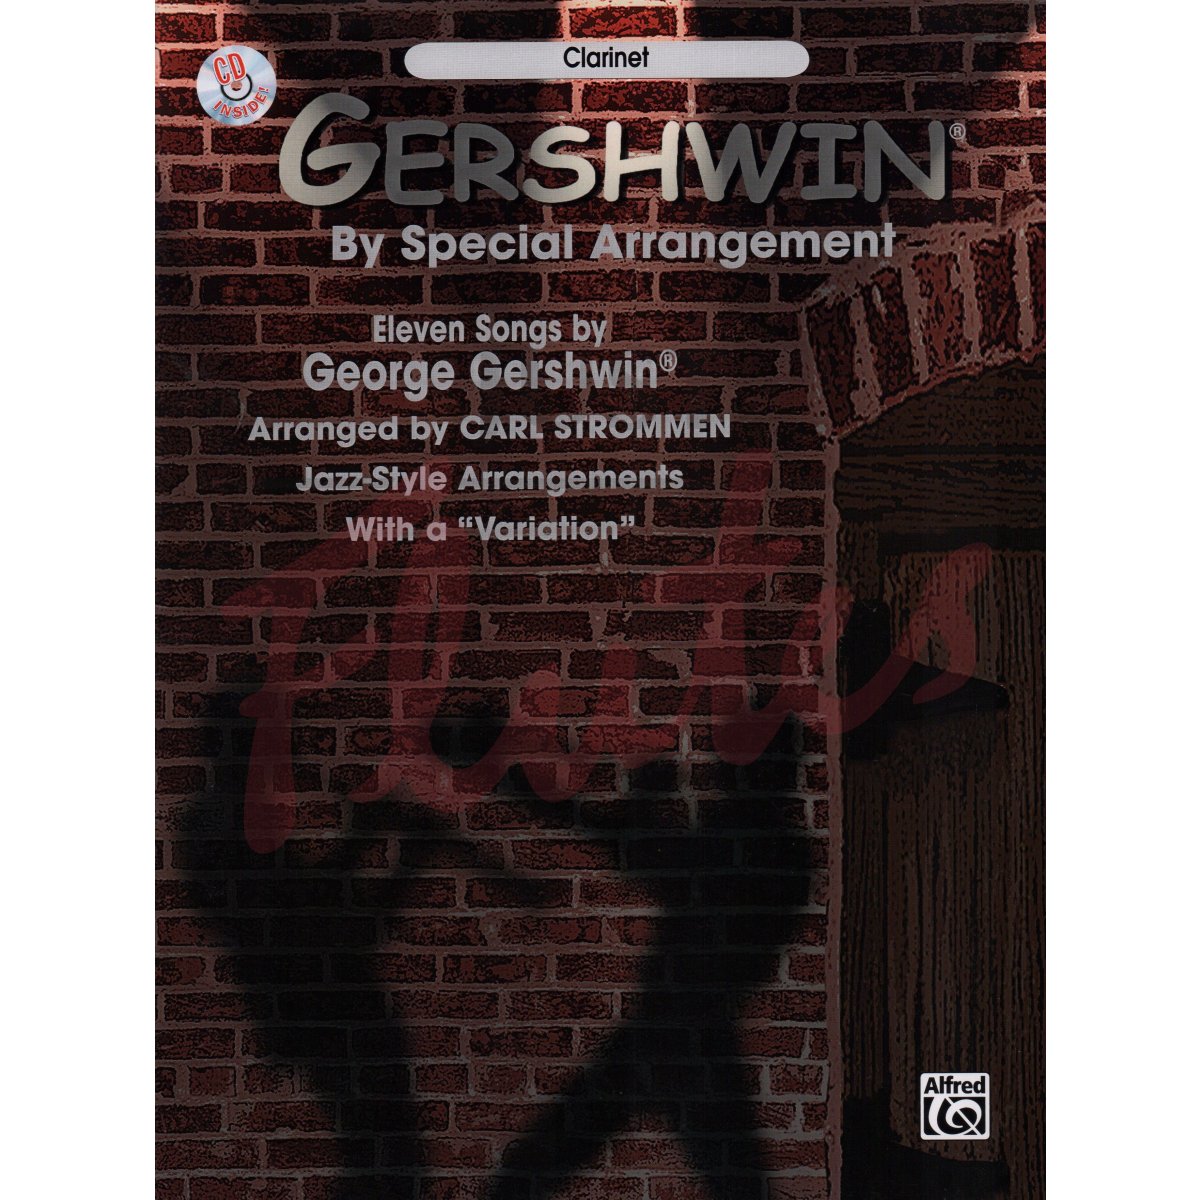 Gershwin by Special Arrangement [Clarinet]